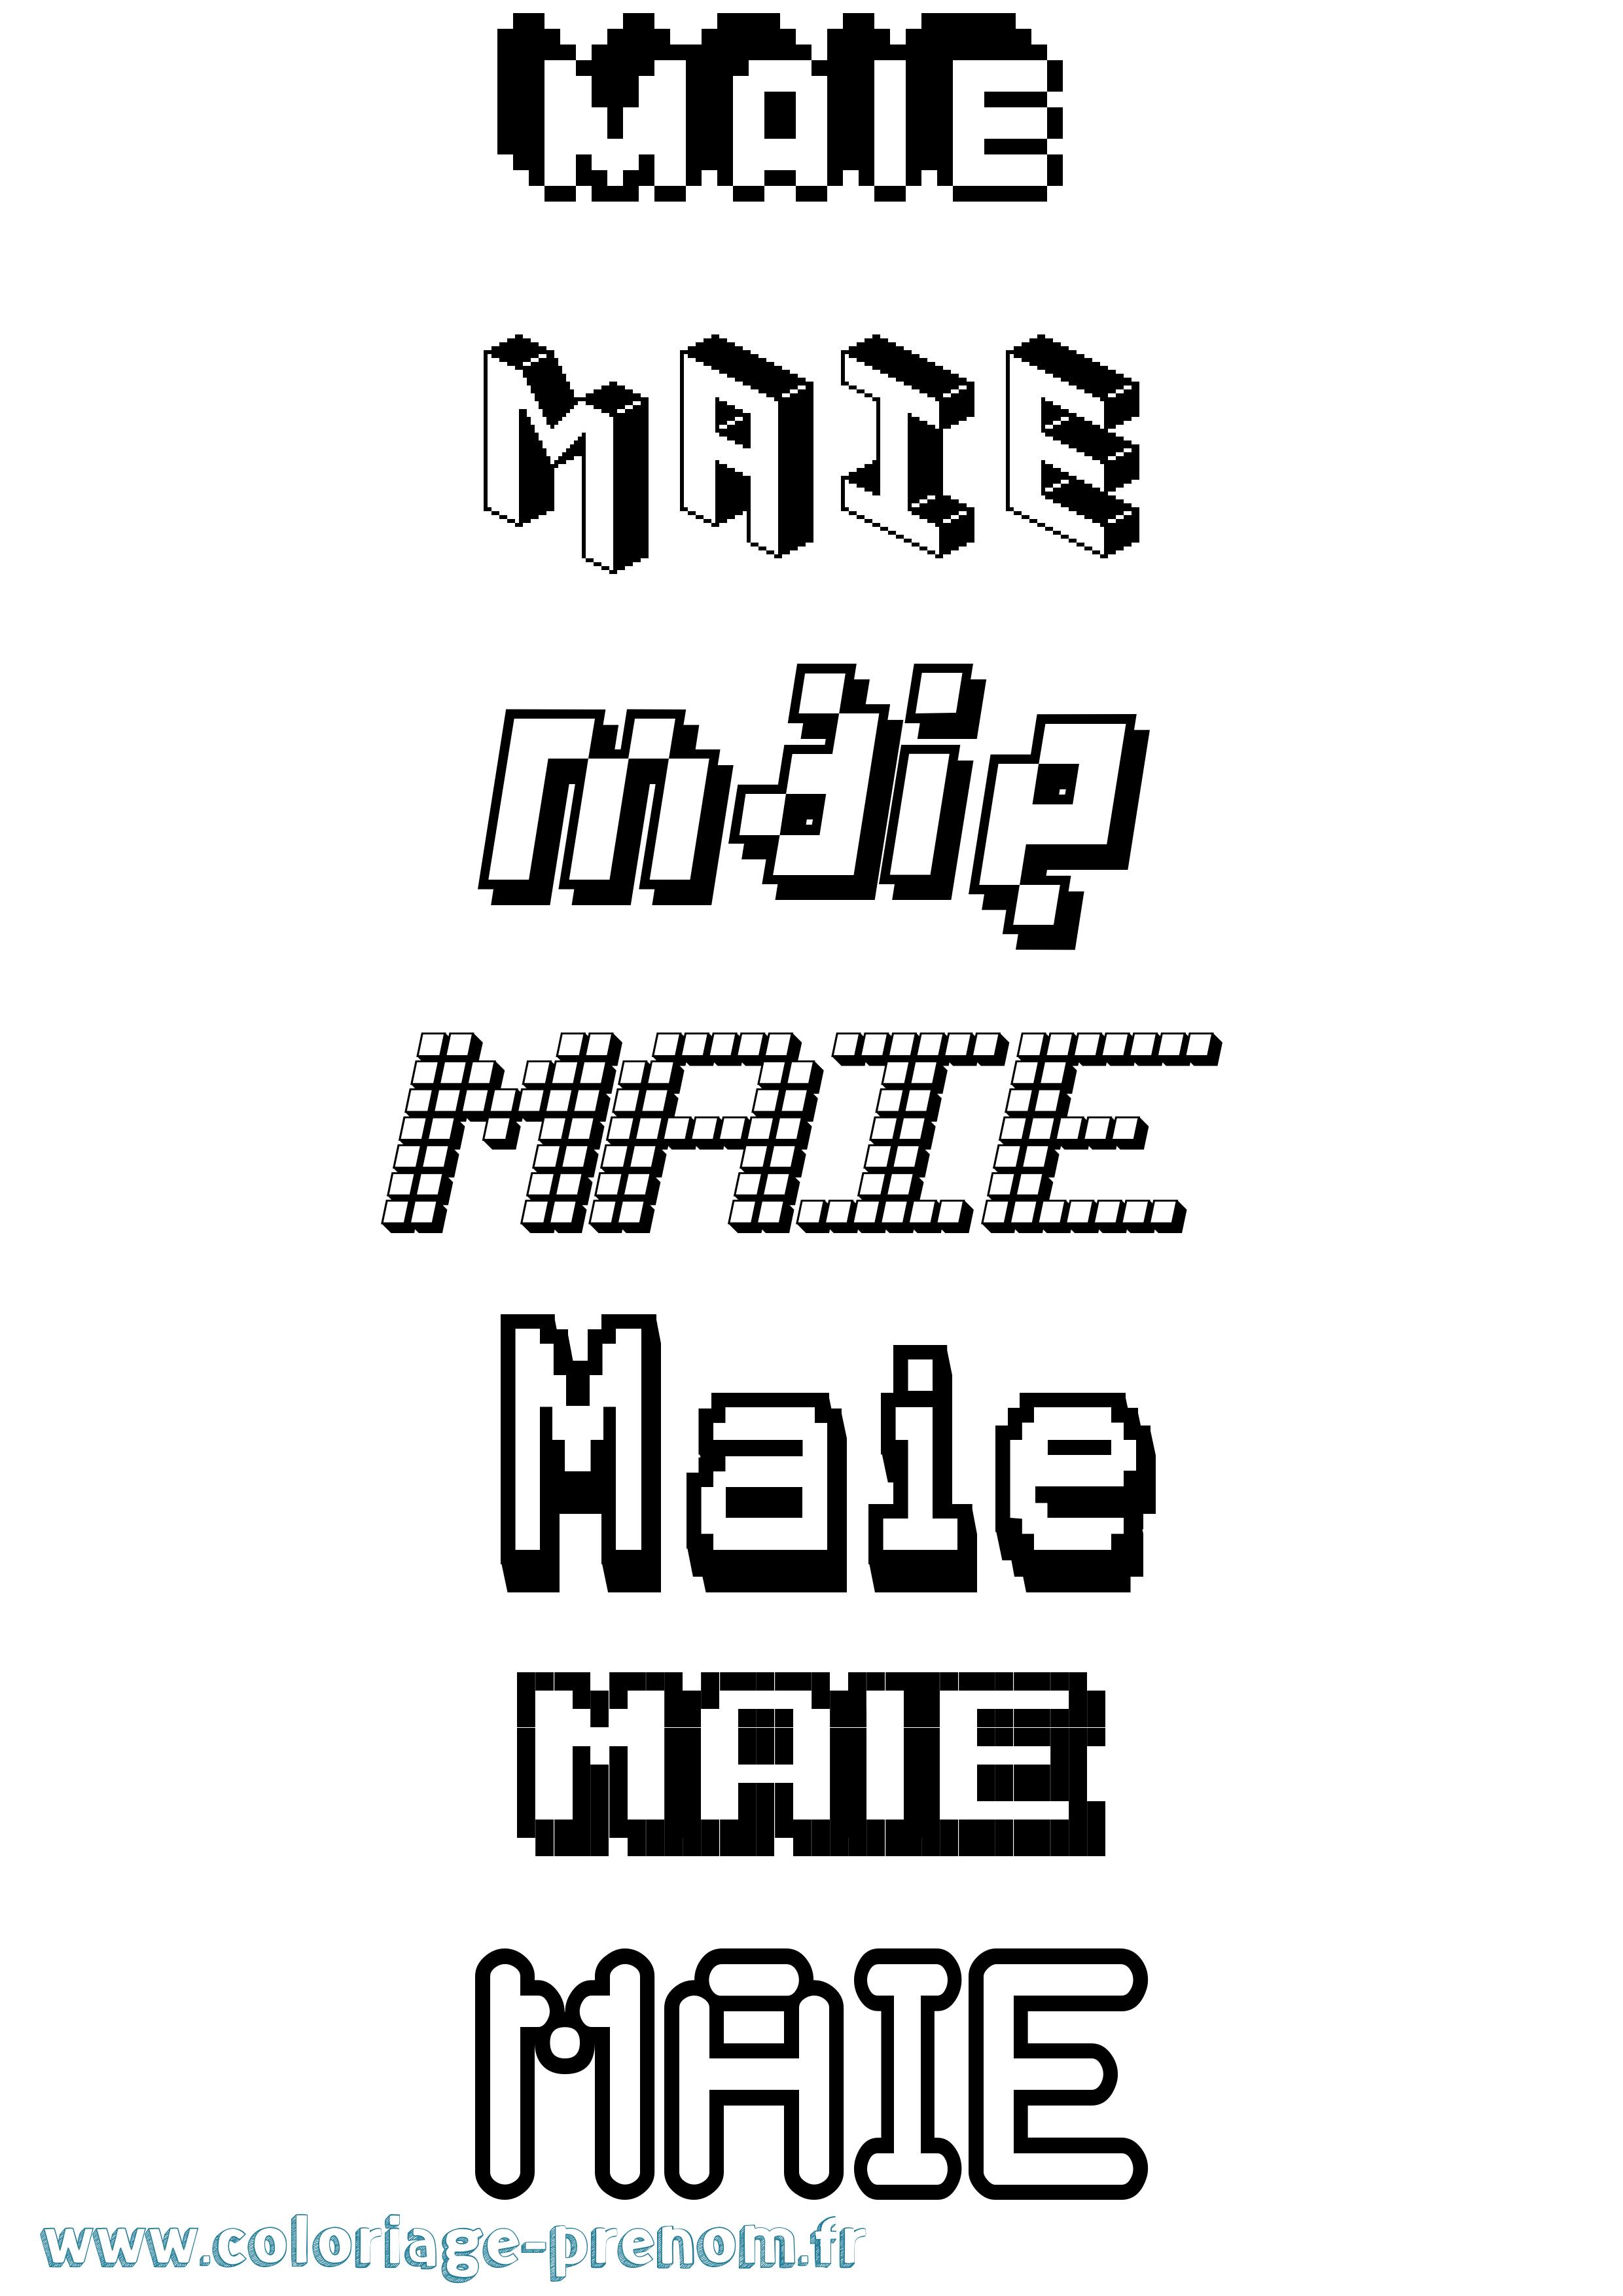 Coloriage prénom Maie Pixel